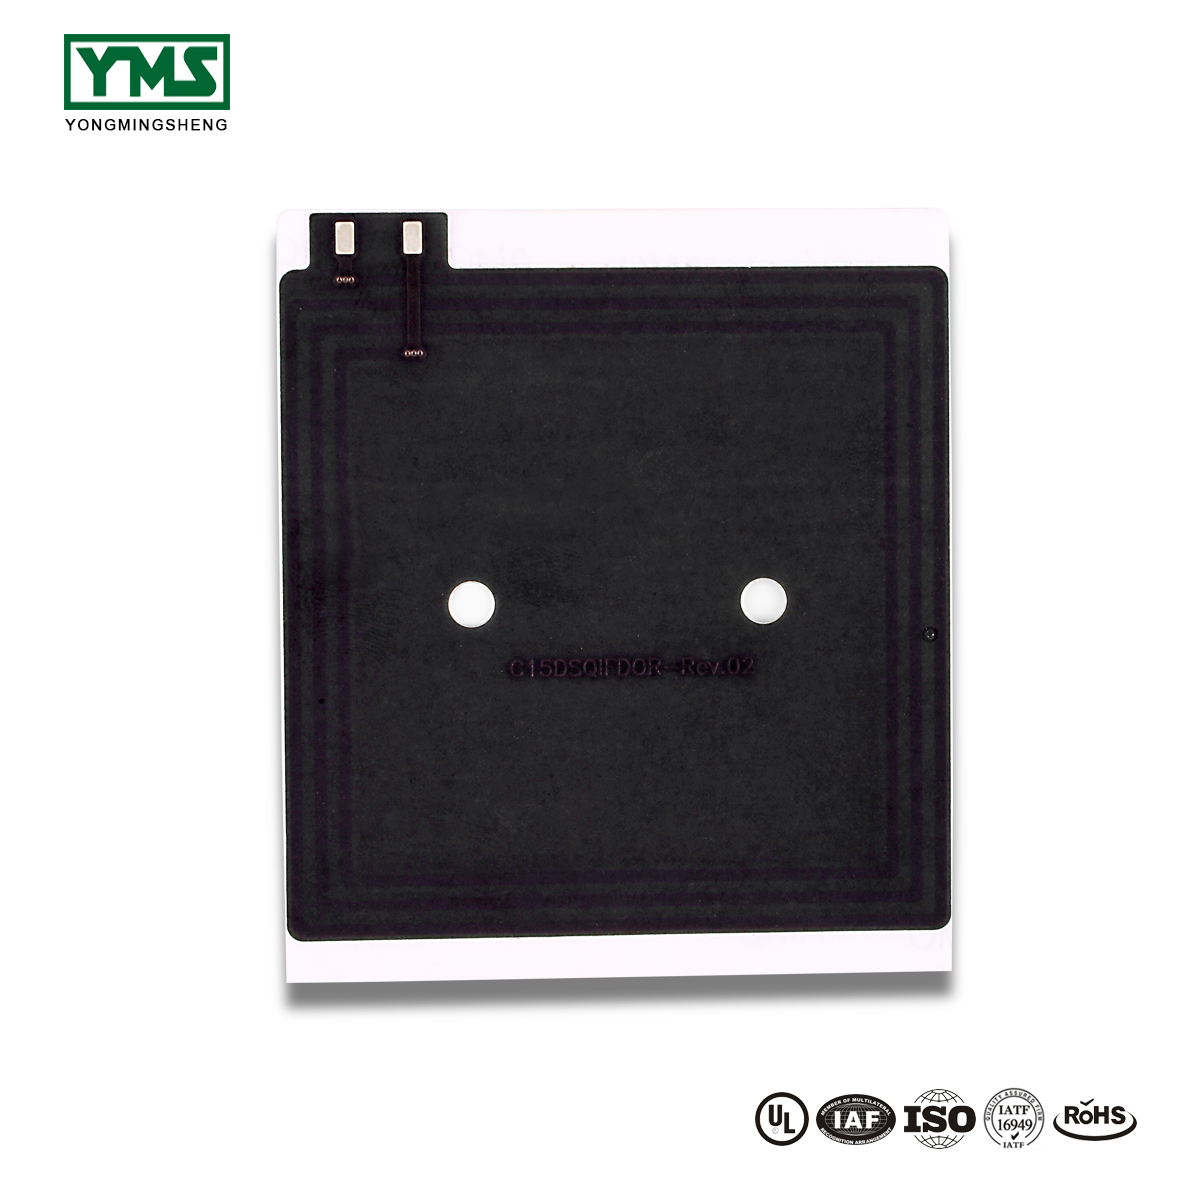 Wholesale Discount Flexible Printed Circuits Board - 1Layer Black solder mask Flexible Board | YMSPCB – Yongmingsheng